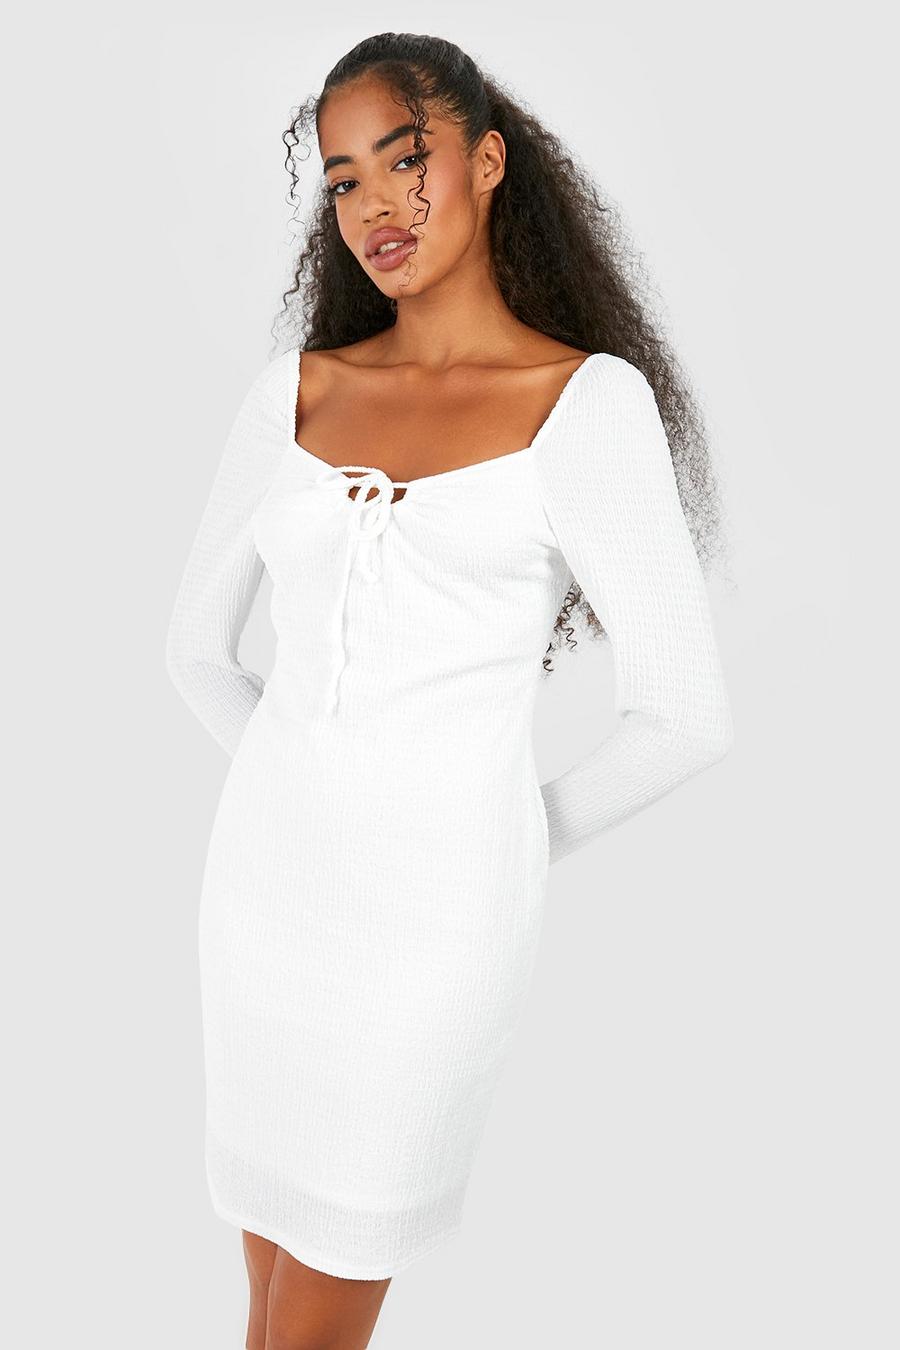 Ivory white Textured Tie Bust Mini Dress